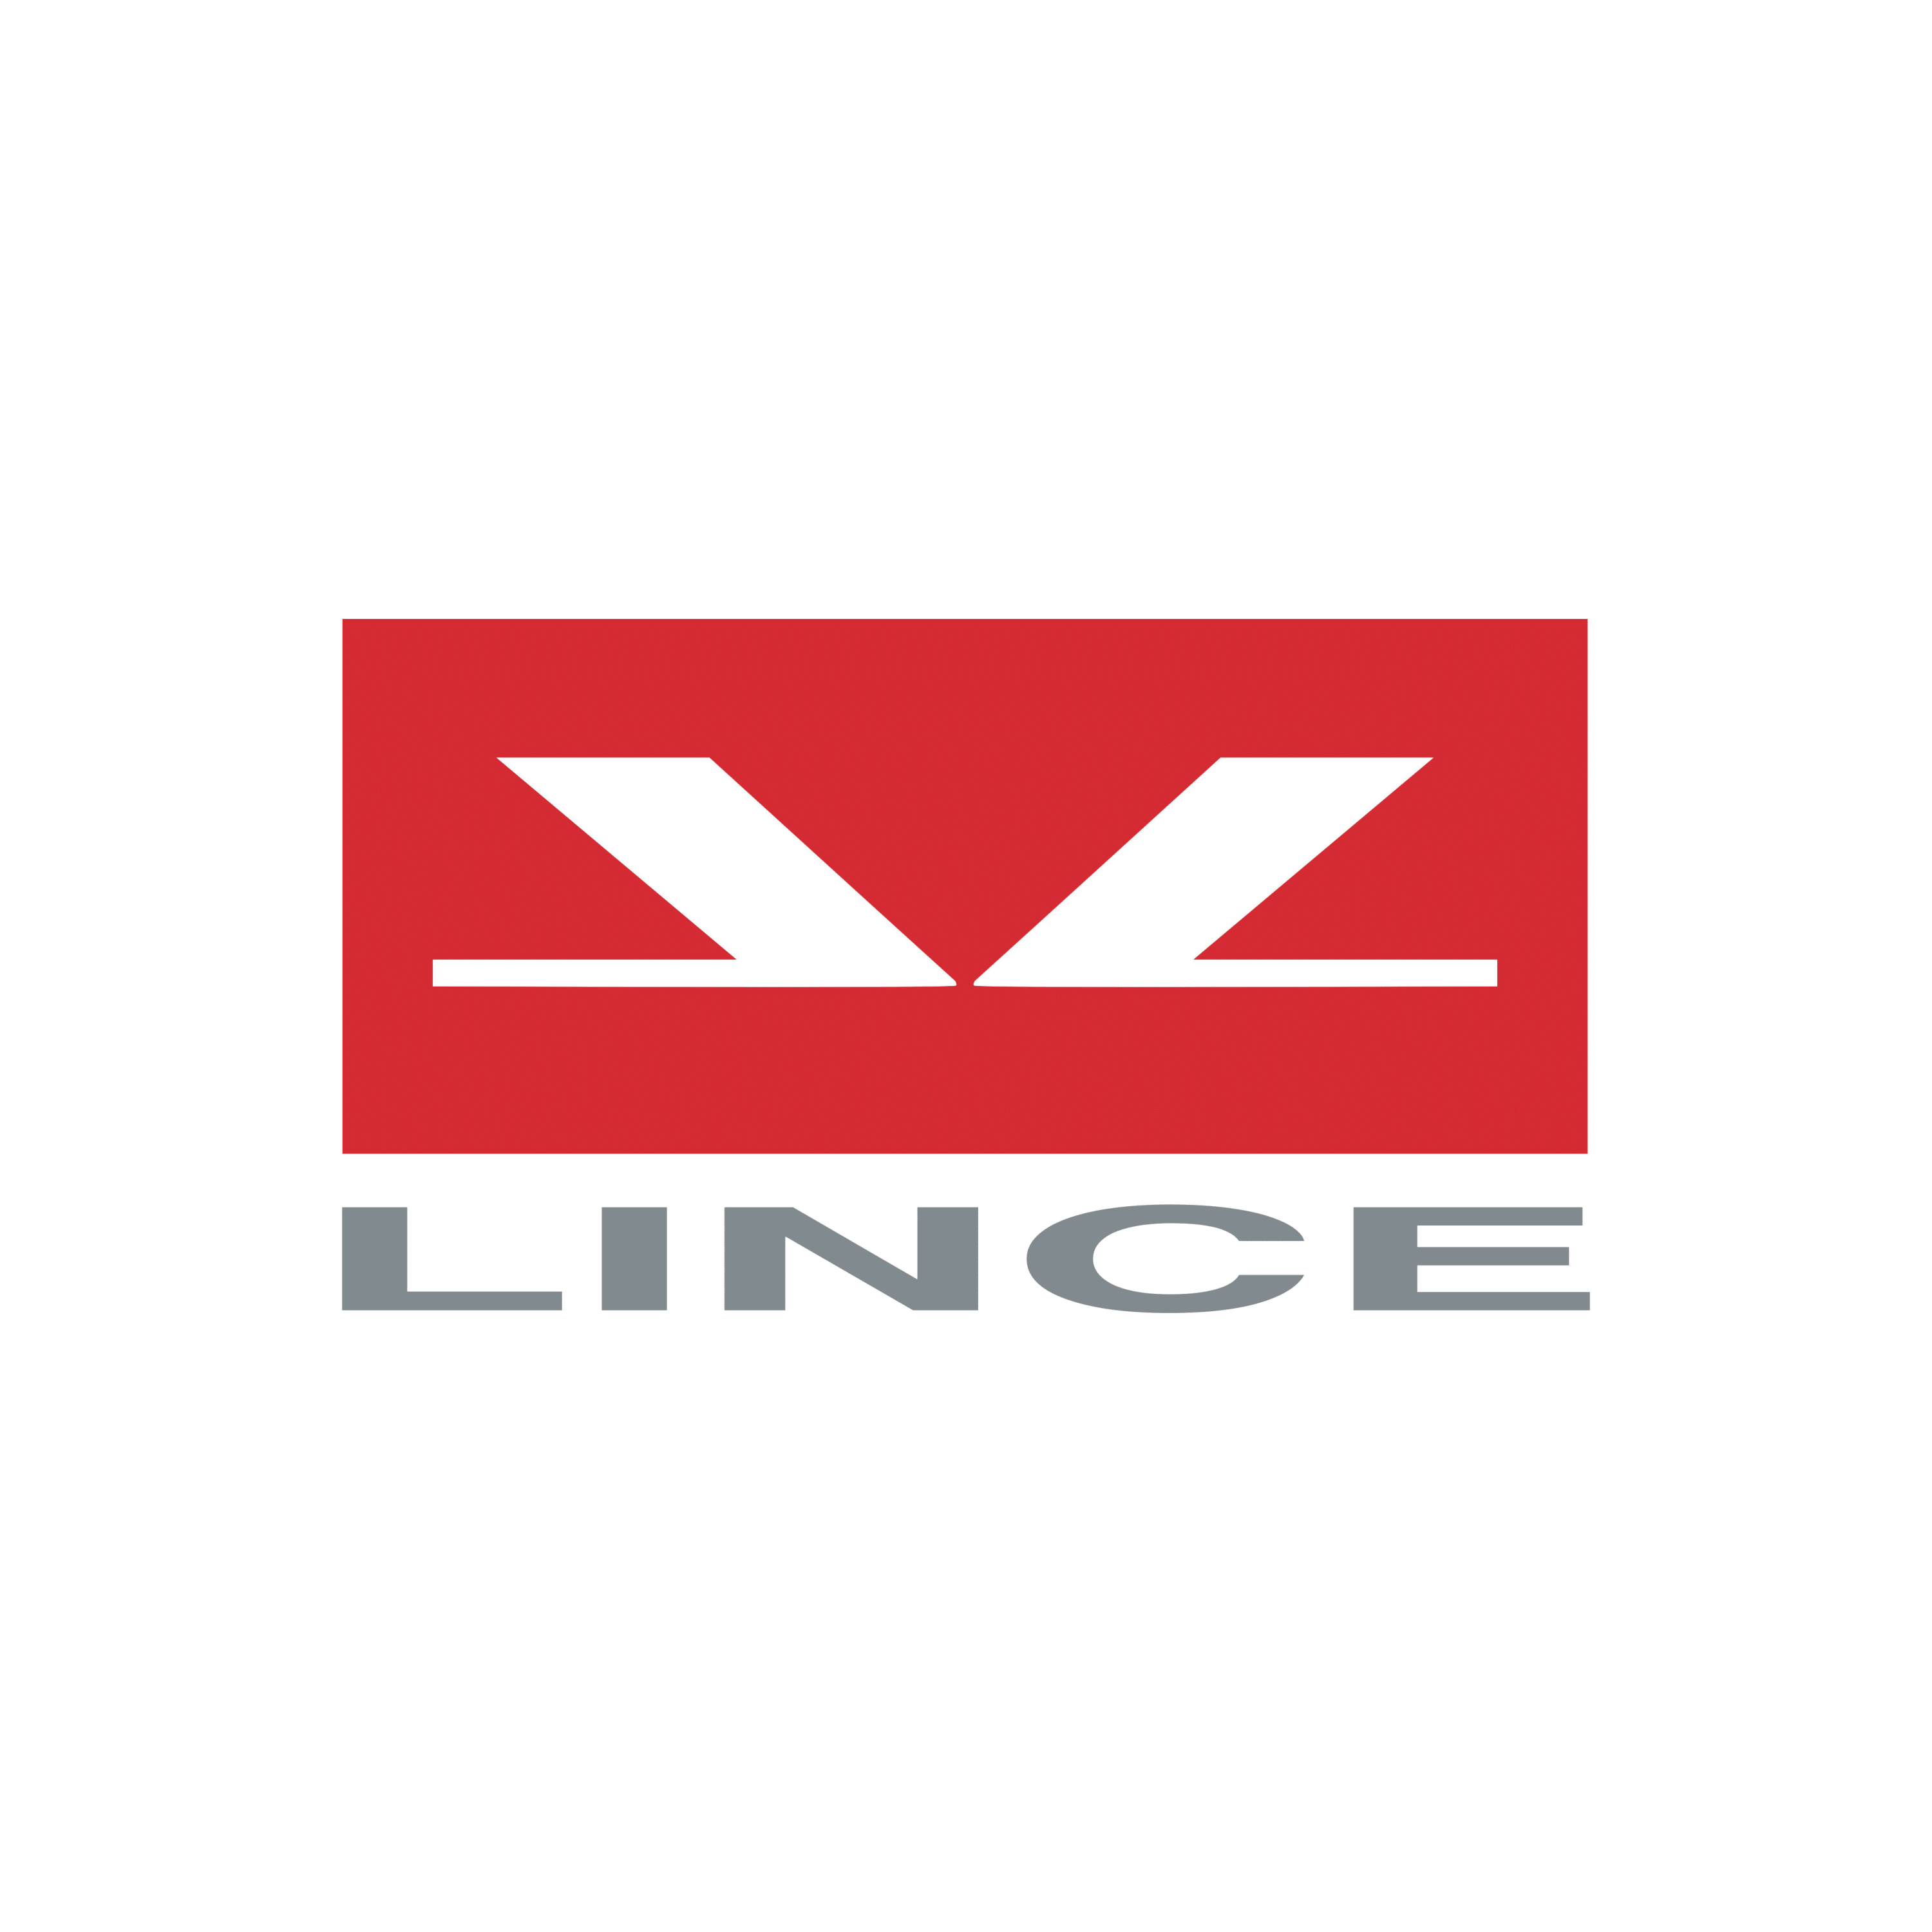 Lince - LOGO-1